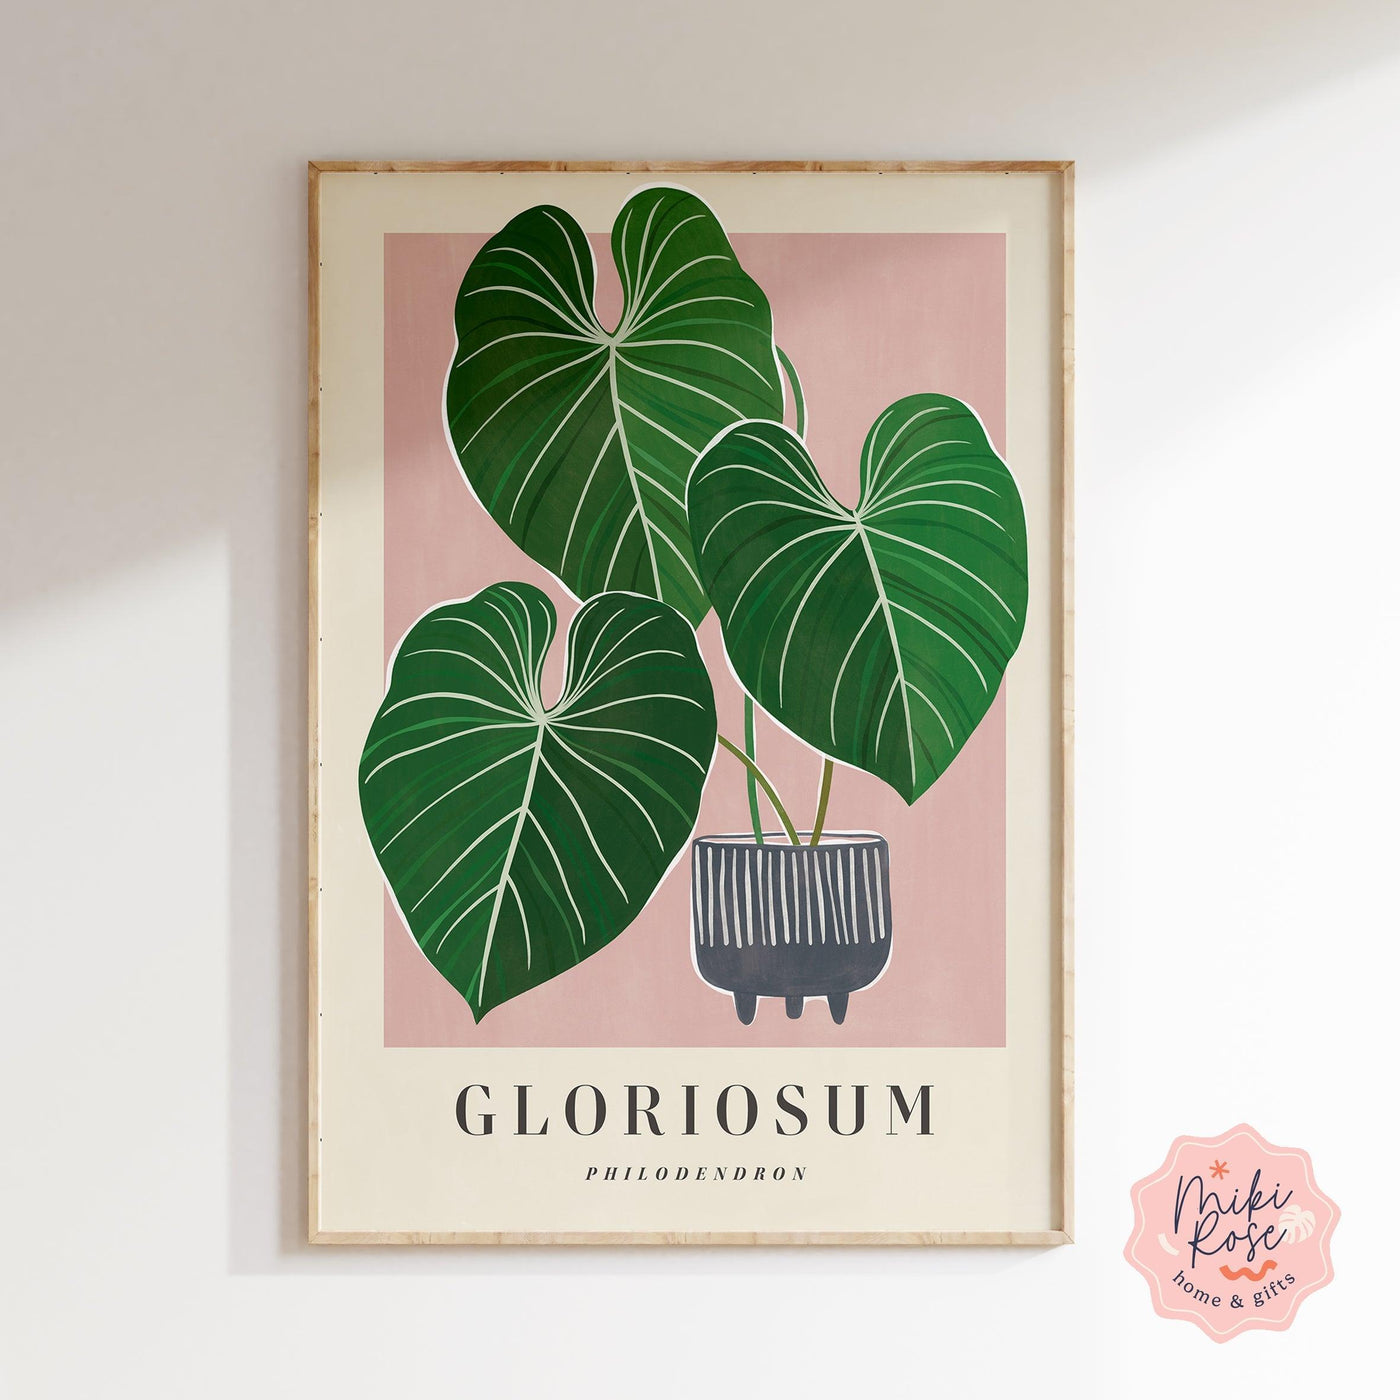 Philodendron Gloriosum Art Print - House of Kojo